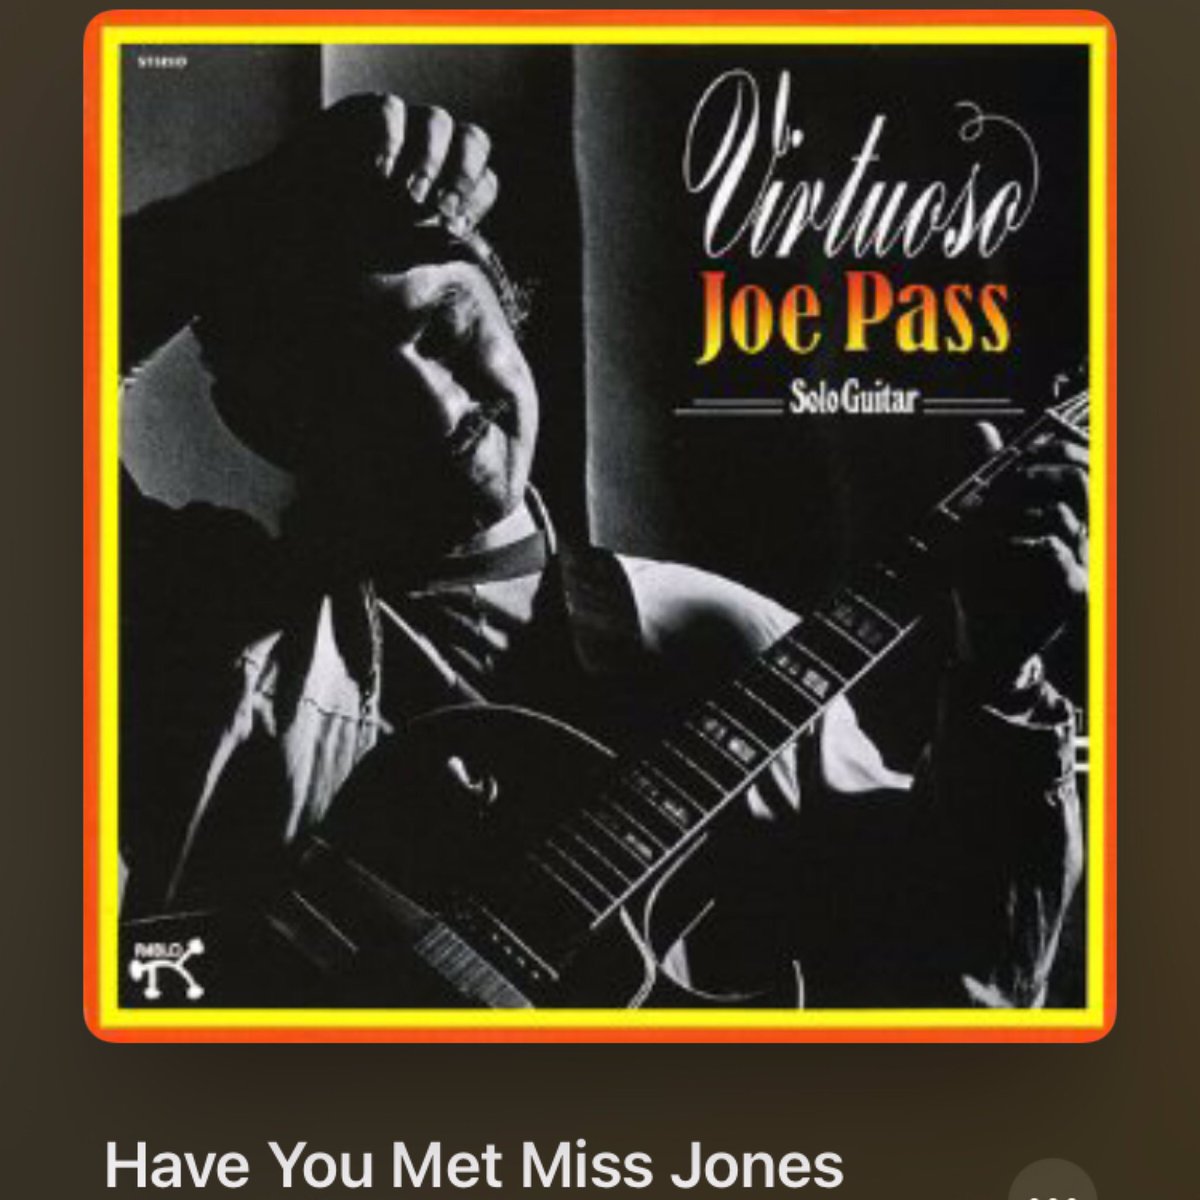 #NowPlaying
🎵 Have You Met Miss Jones
by 🎵 Joe Pass
from 🎵 Virtuoso
#JoePass
#Jazz #guitar #70s 
#LorenzHart #RichardRodgers
#1973 #50yearsago #半世紀前 #ギタージャケ